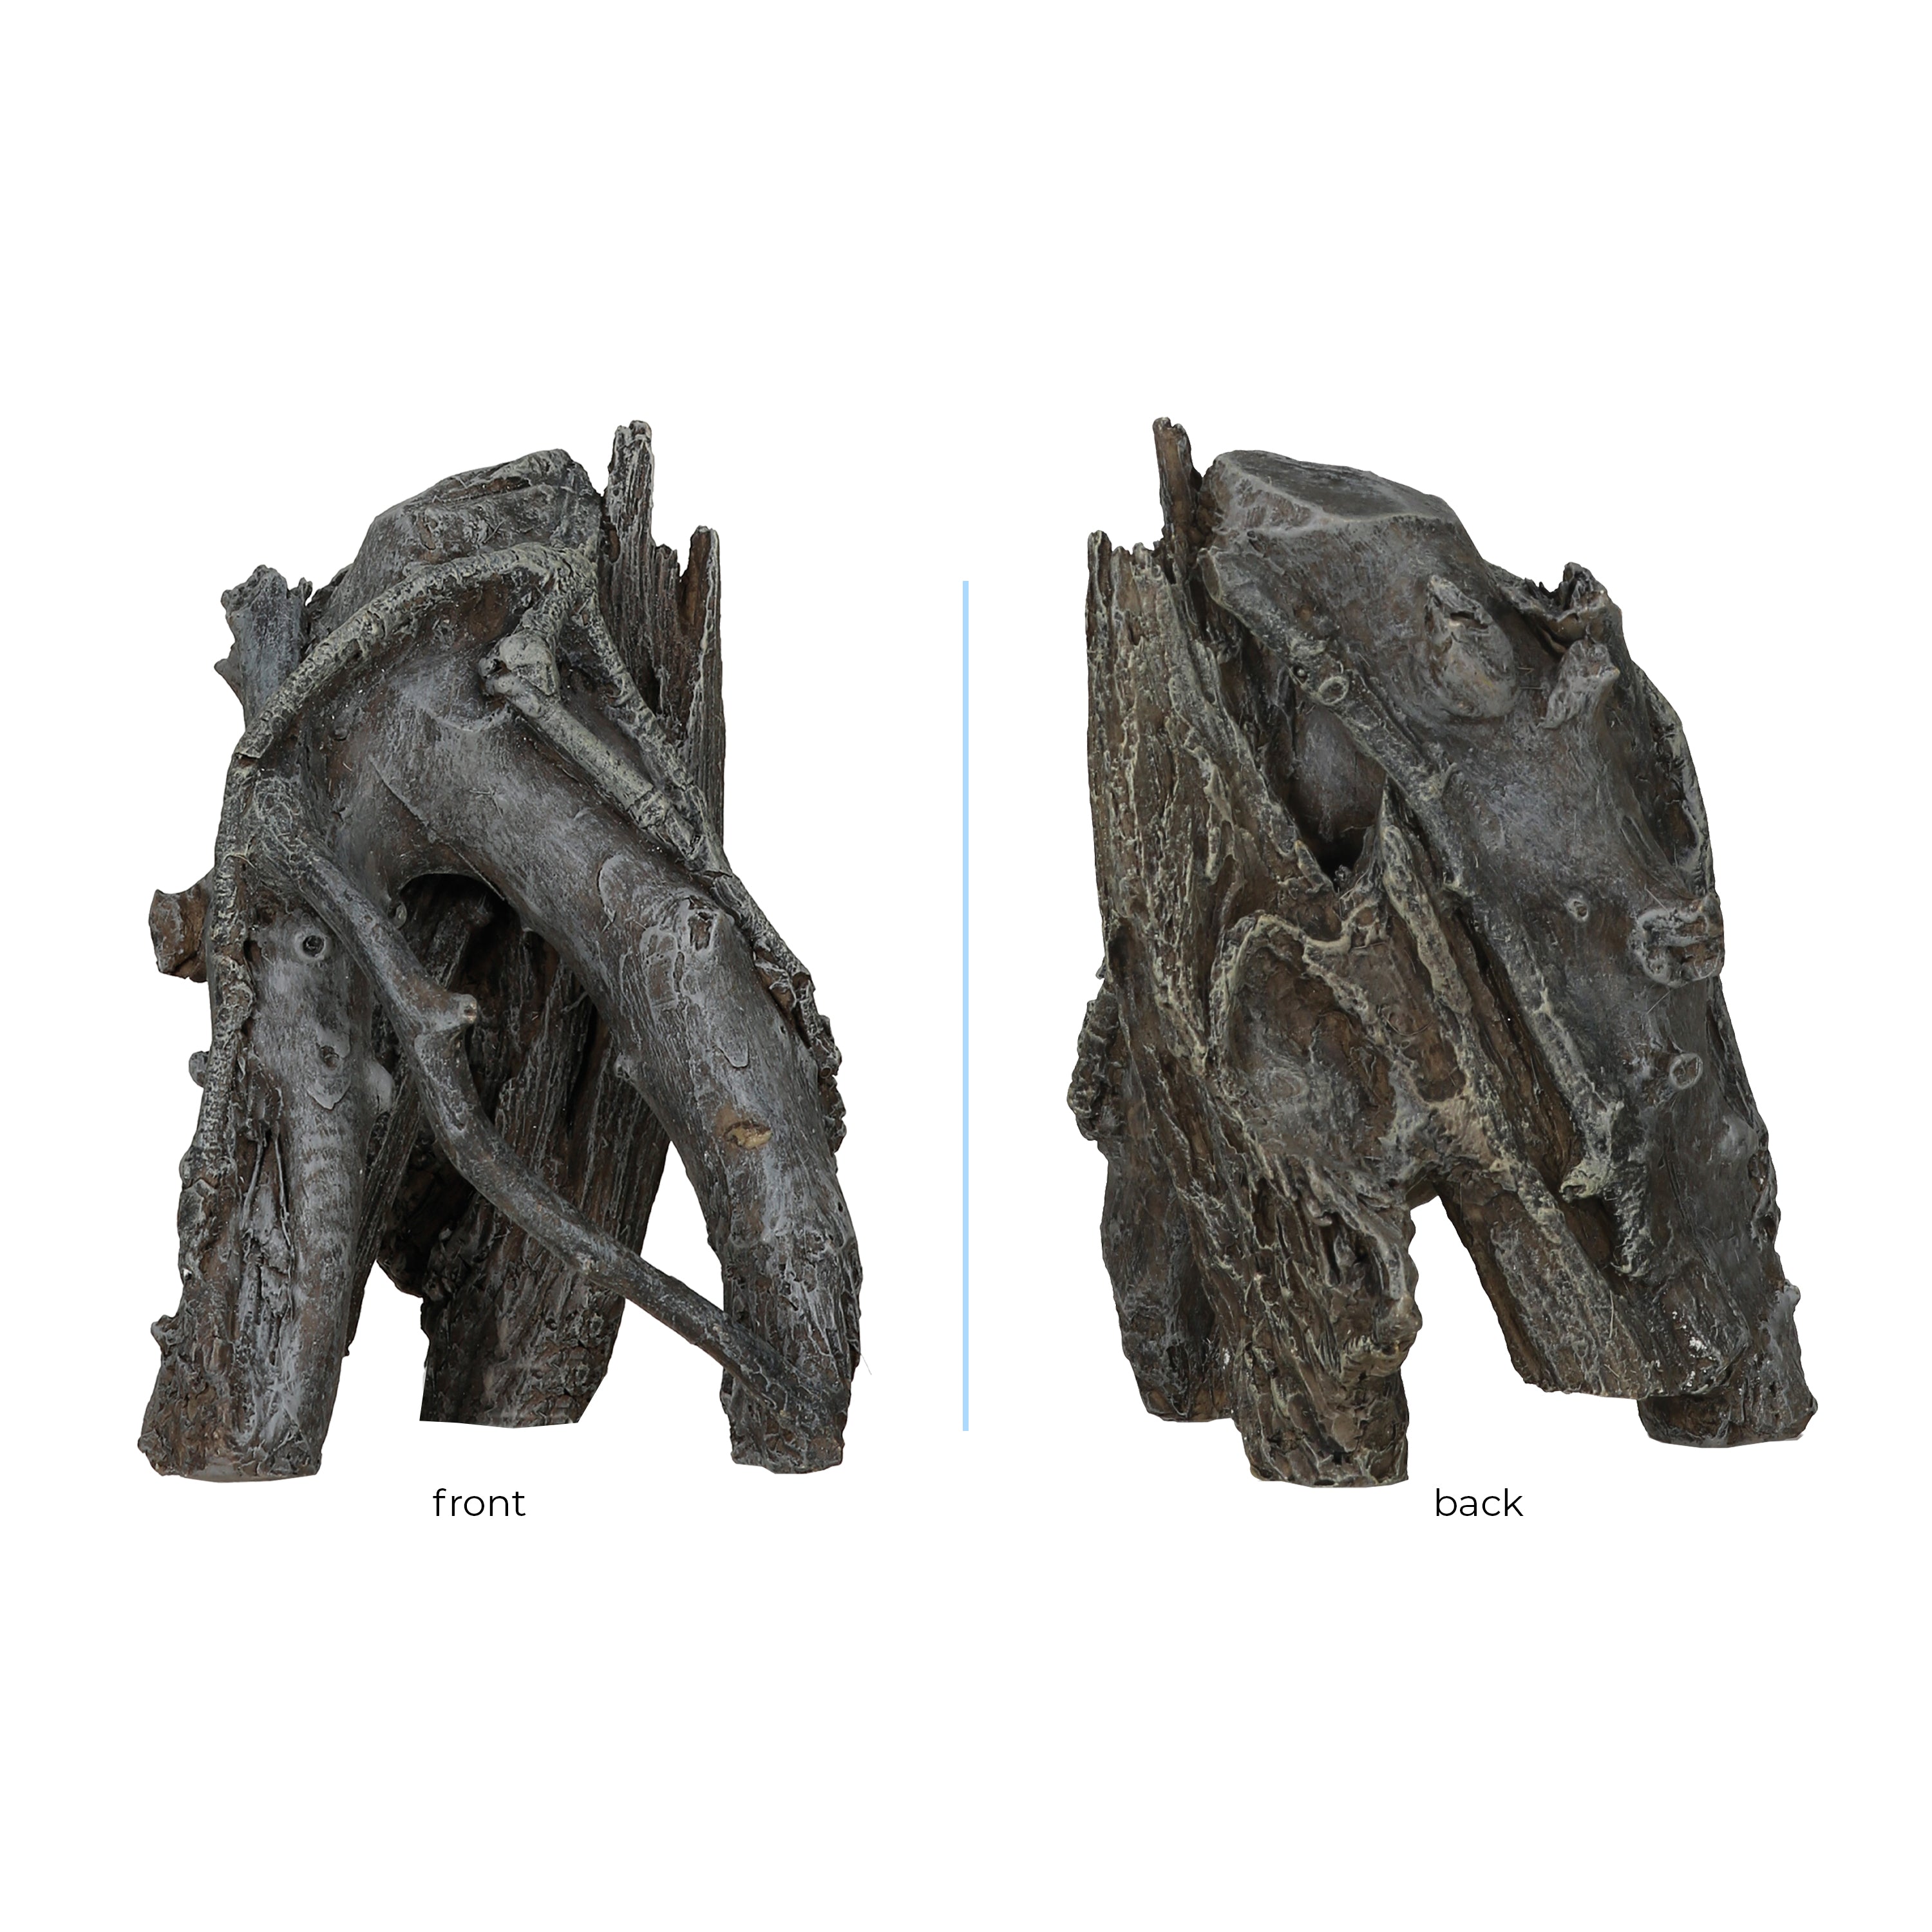 Medium Amazonas Root Sculpture front vs. back